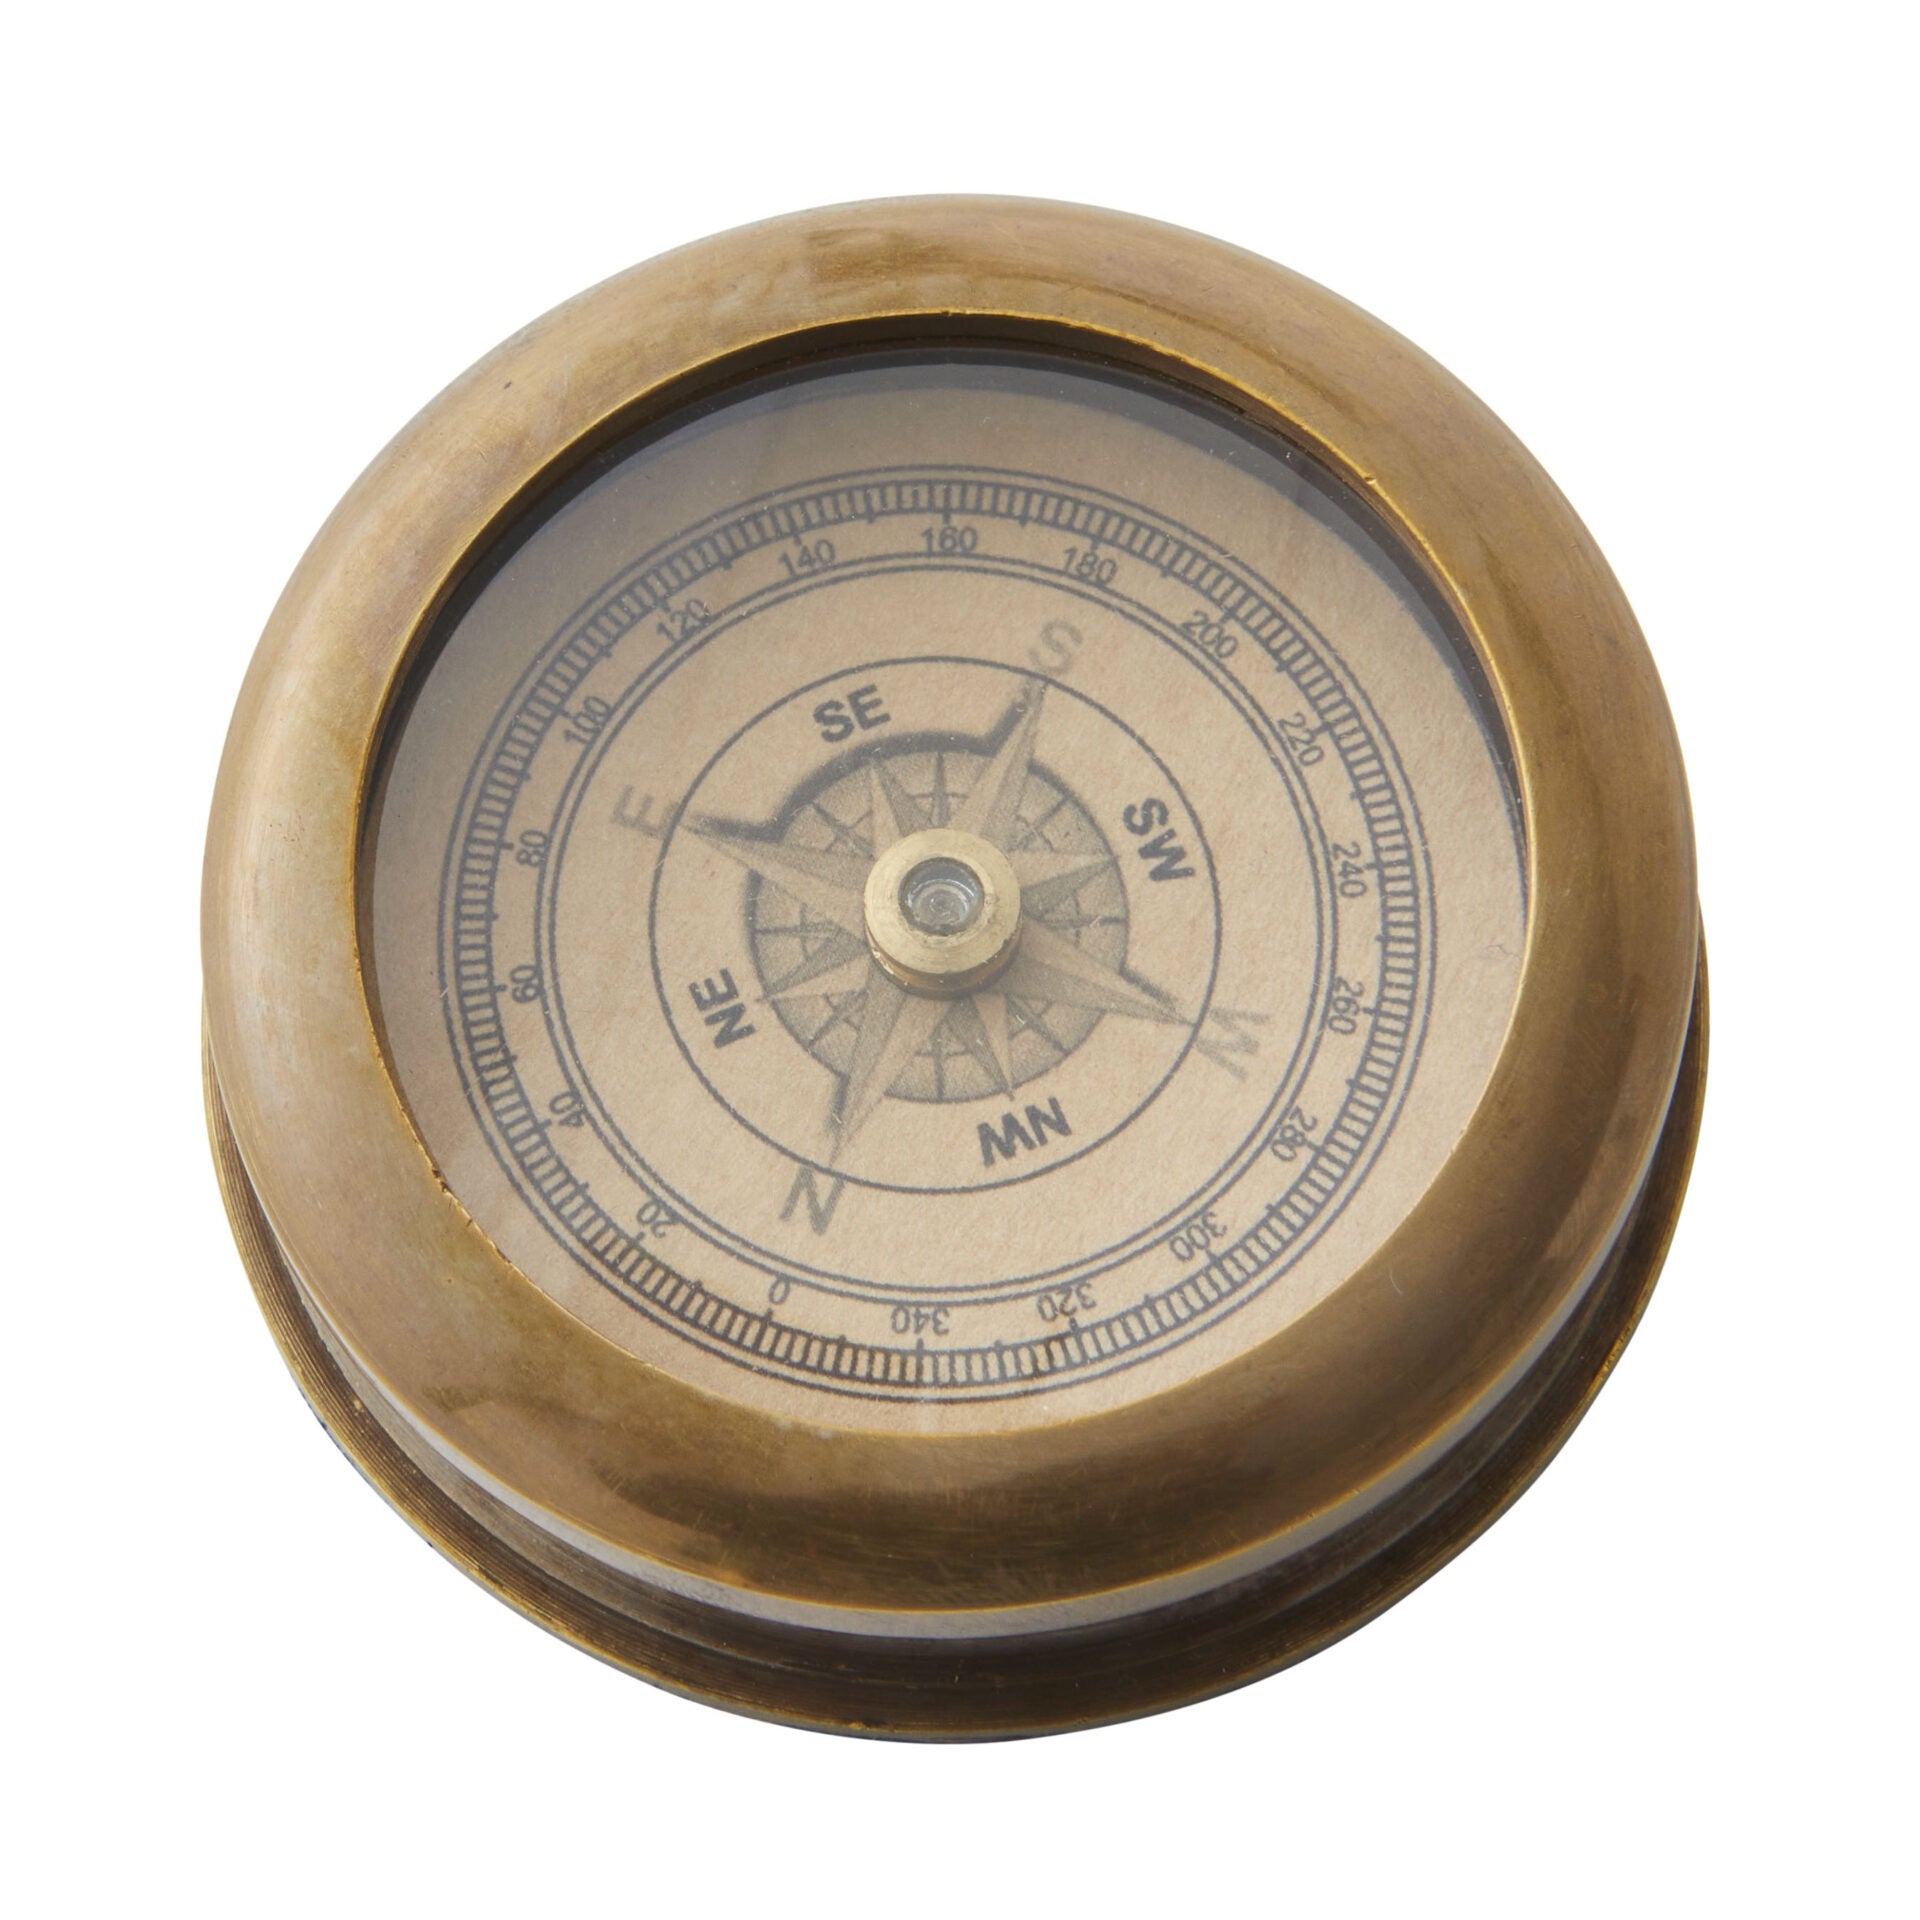 Fitzroy's Compass